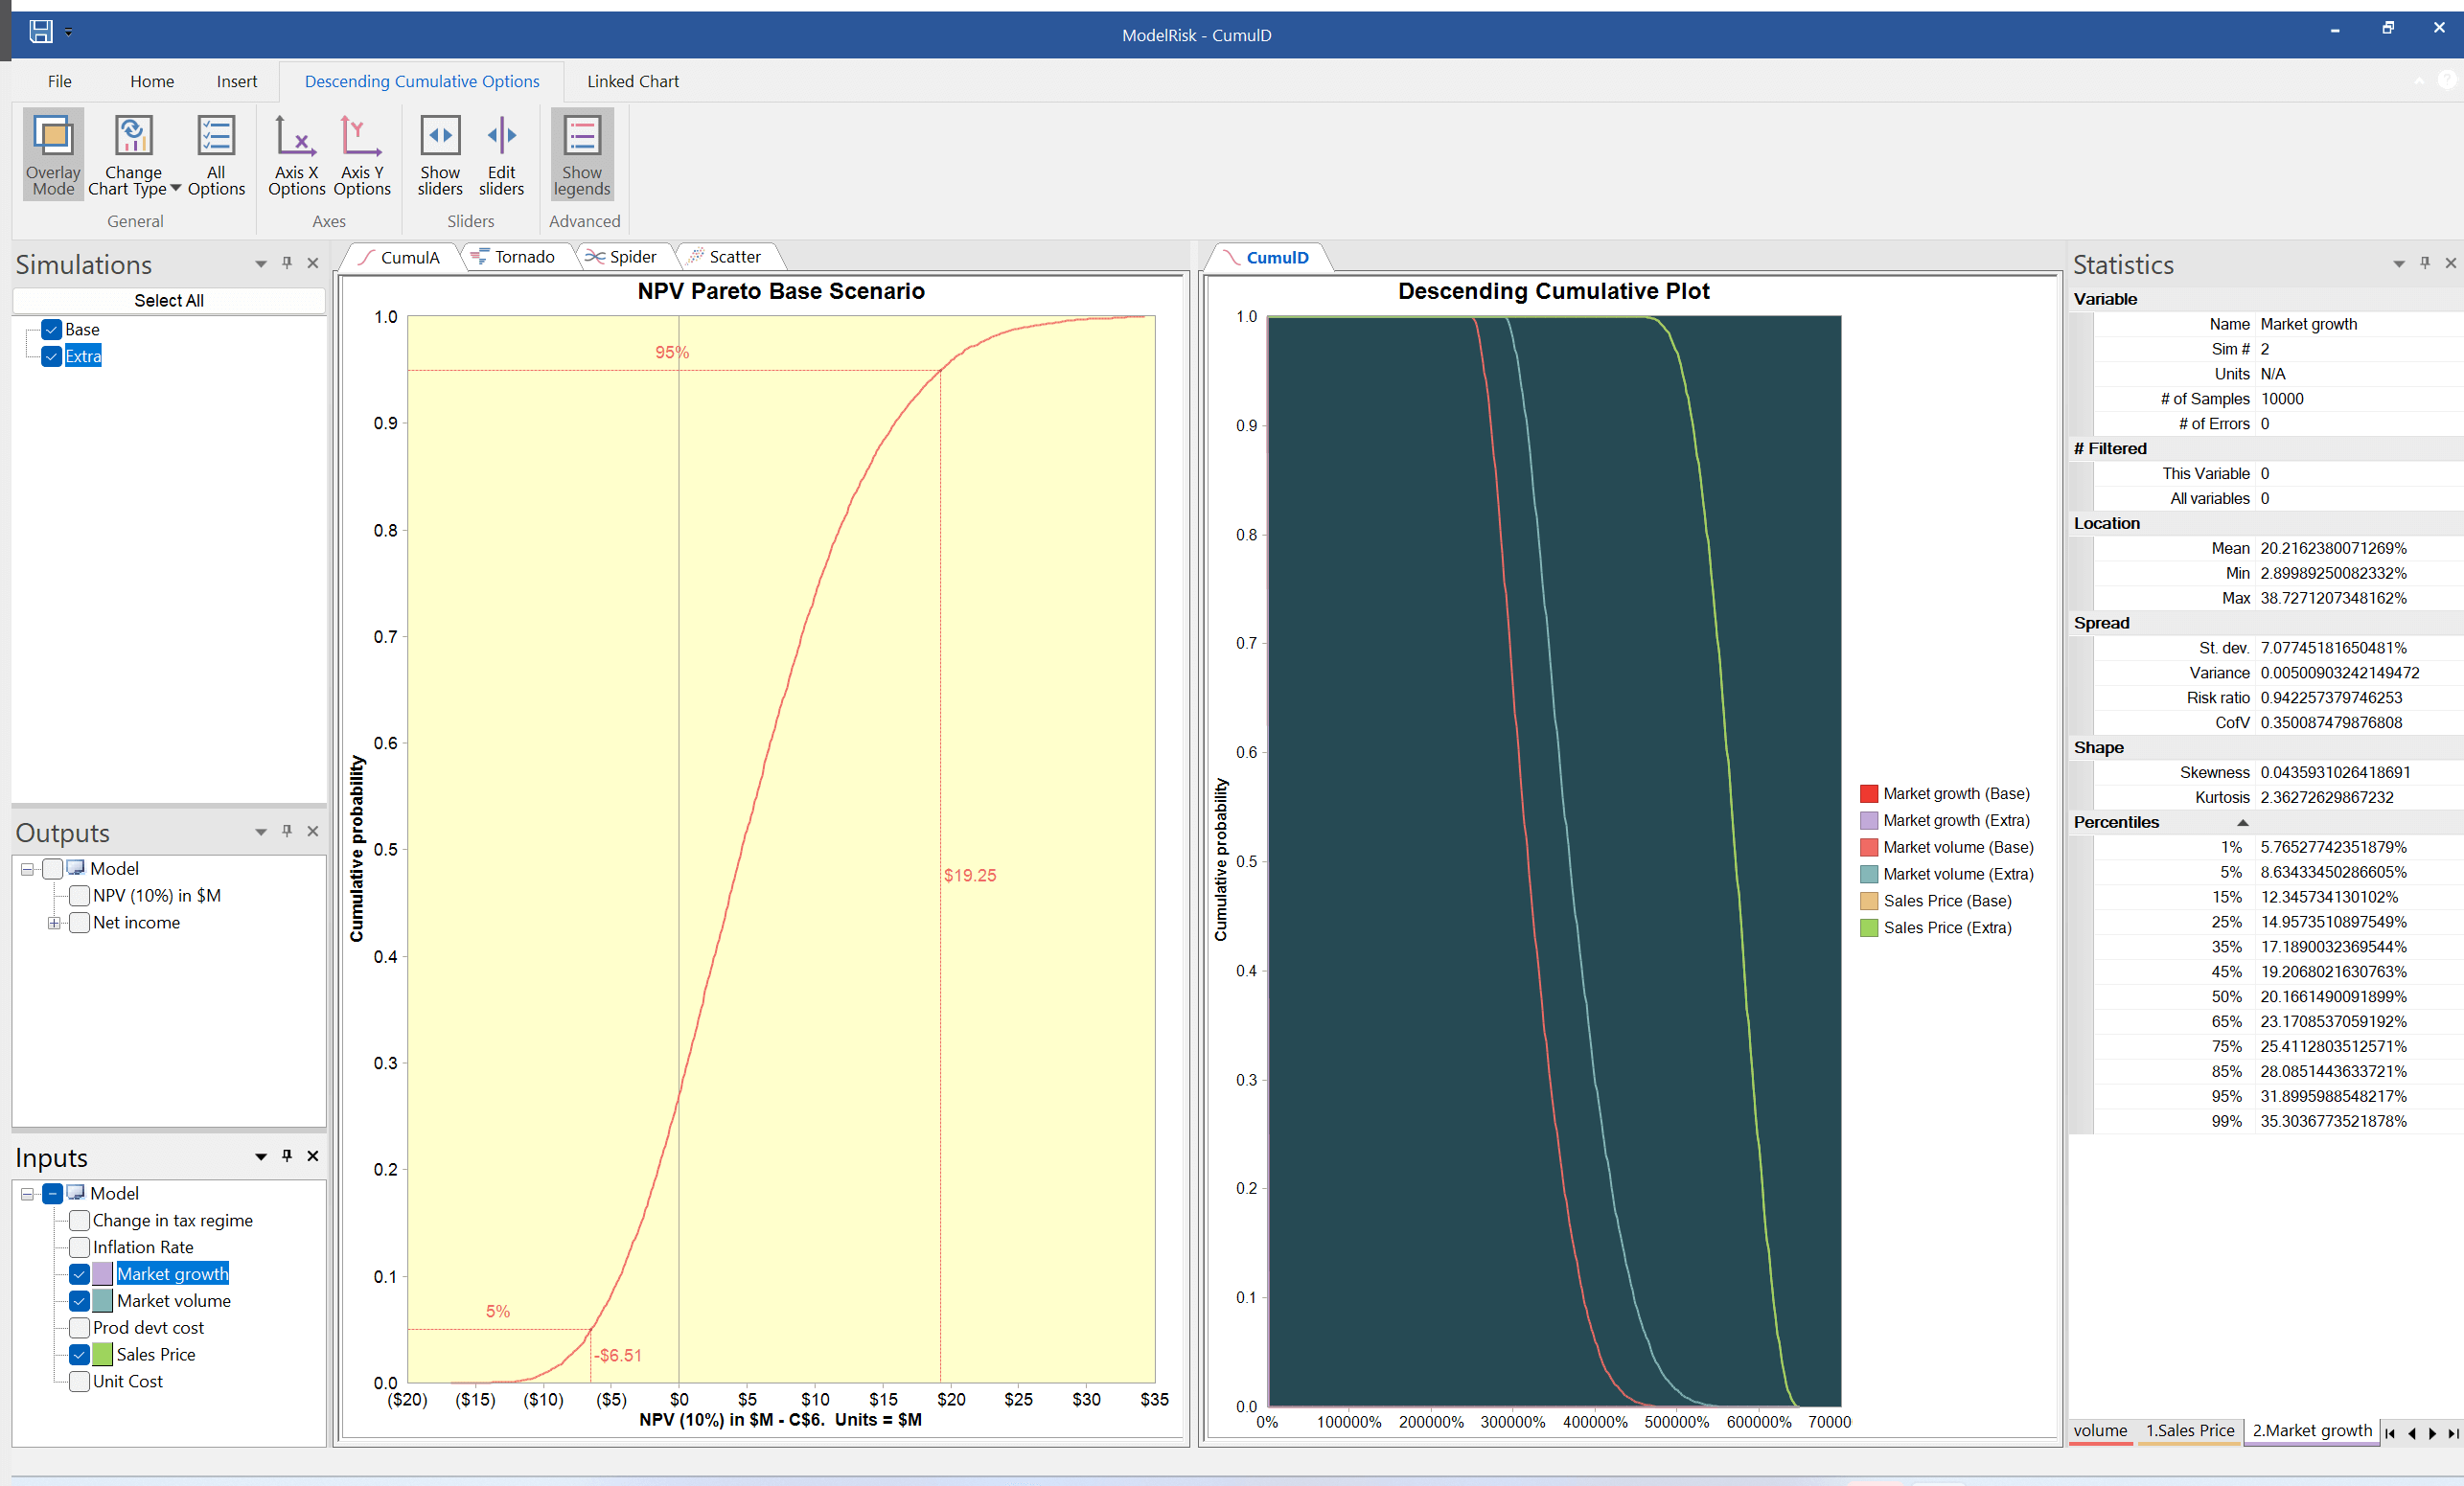 Simulation results in cumulative plot format